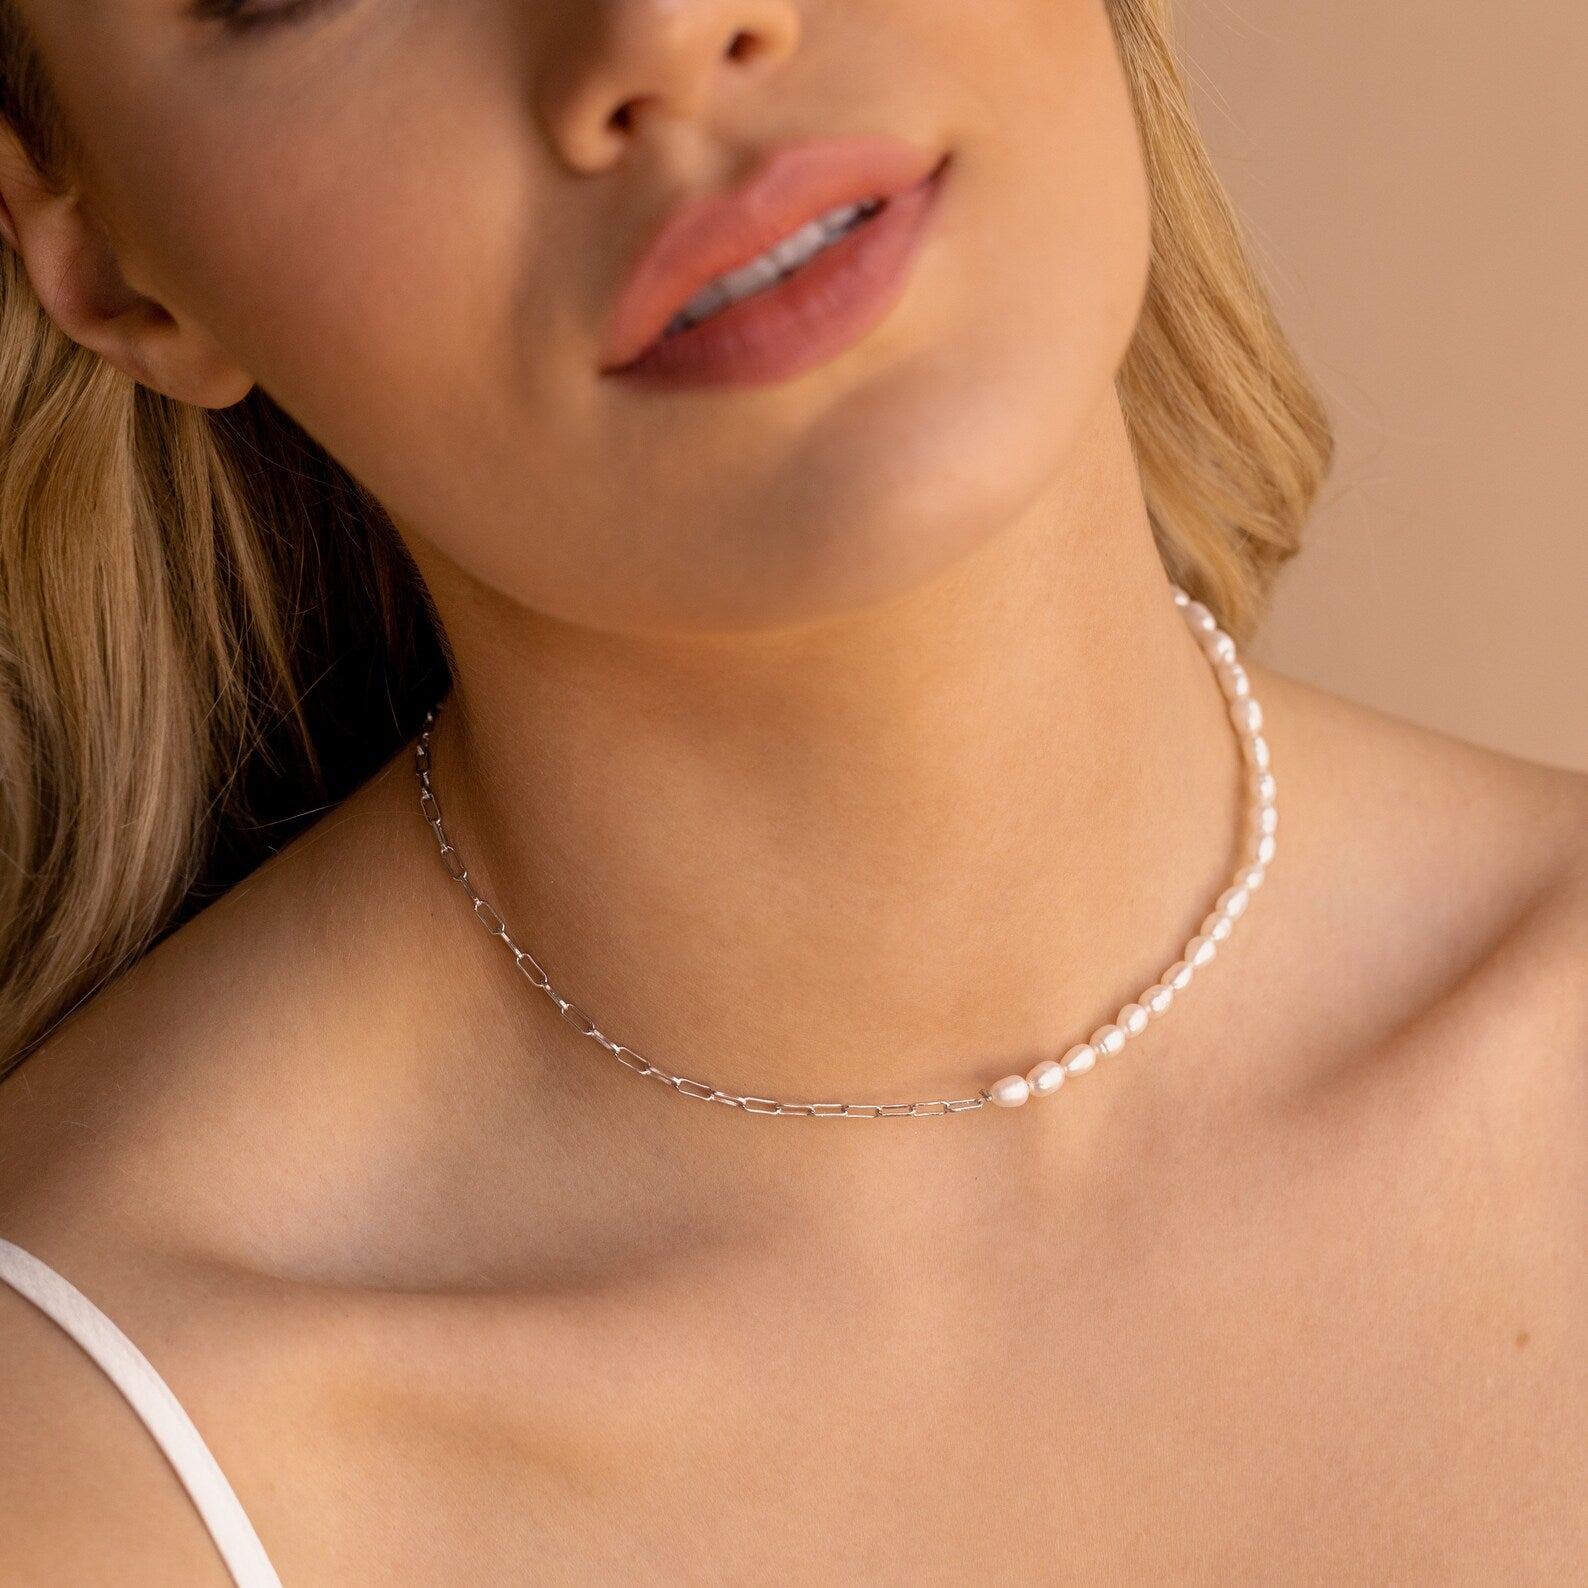 VICTORIA freshwater pearl pendant - Carrie Whelan Designs